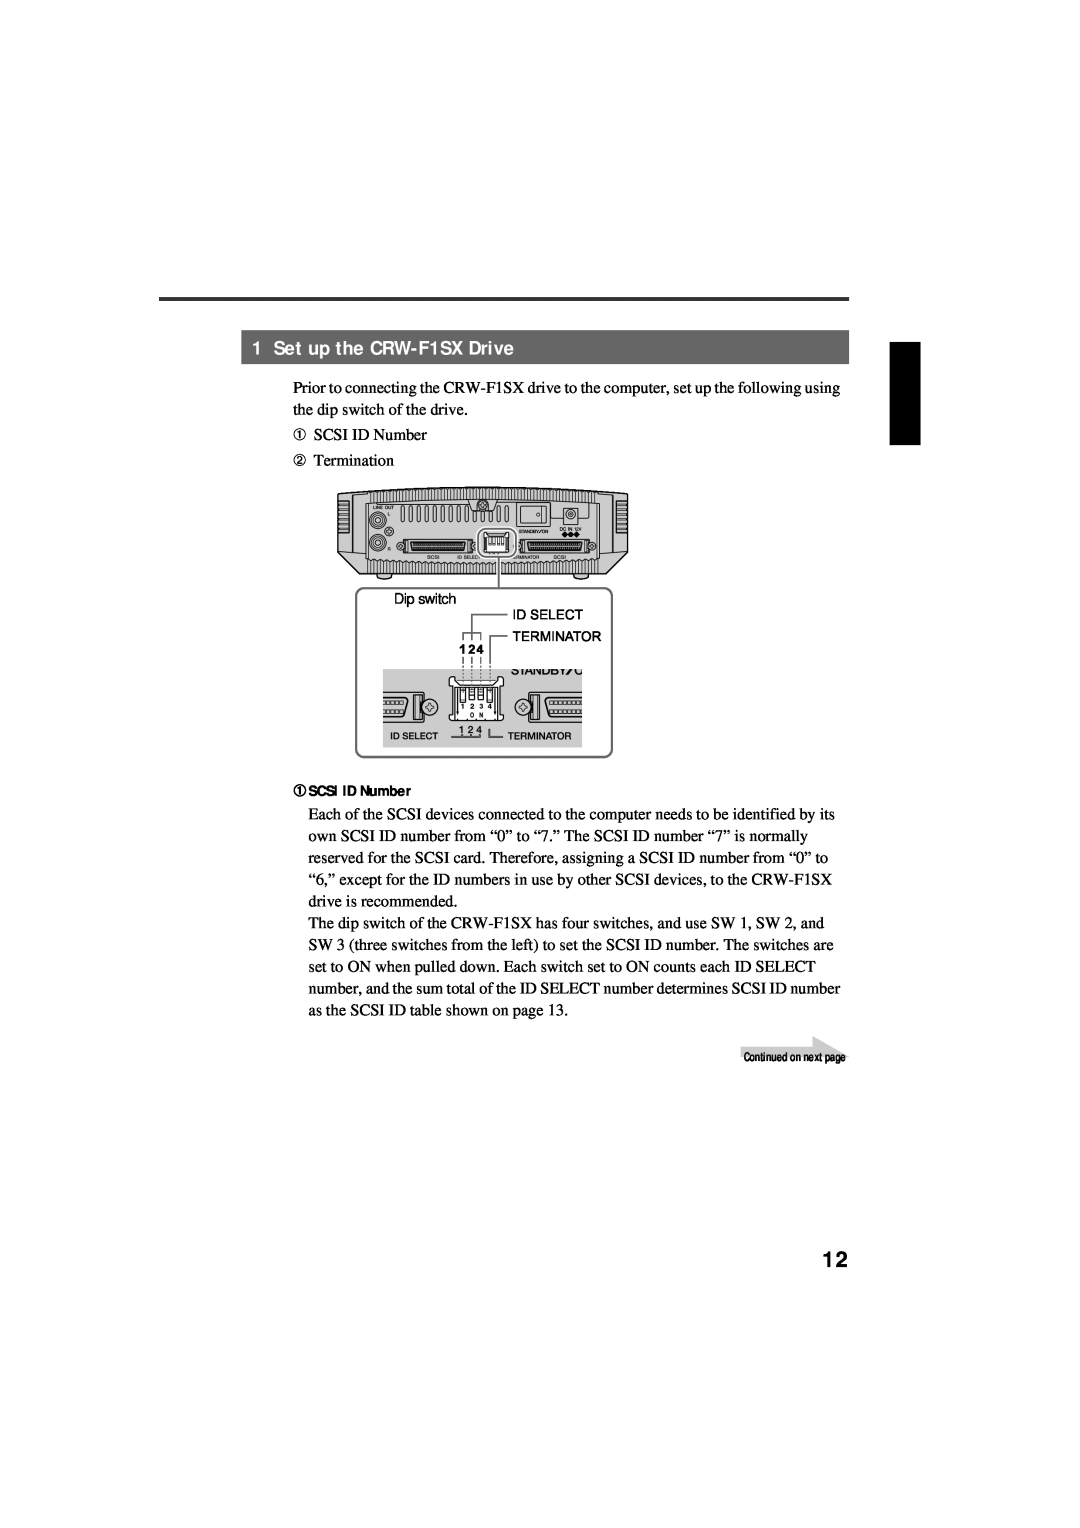 Yamaha manual Set up the CRW-F1SX Drive, ➀ SCSI ID Number 